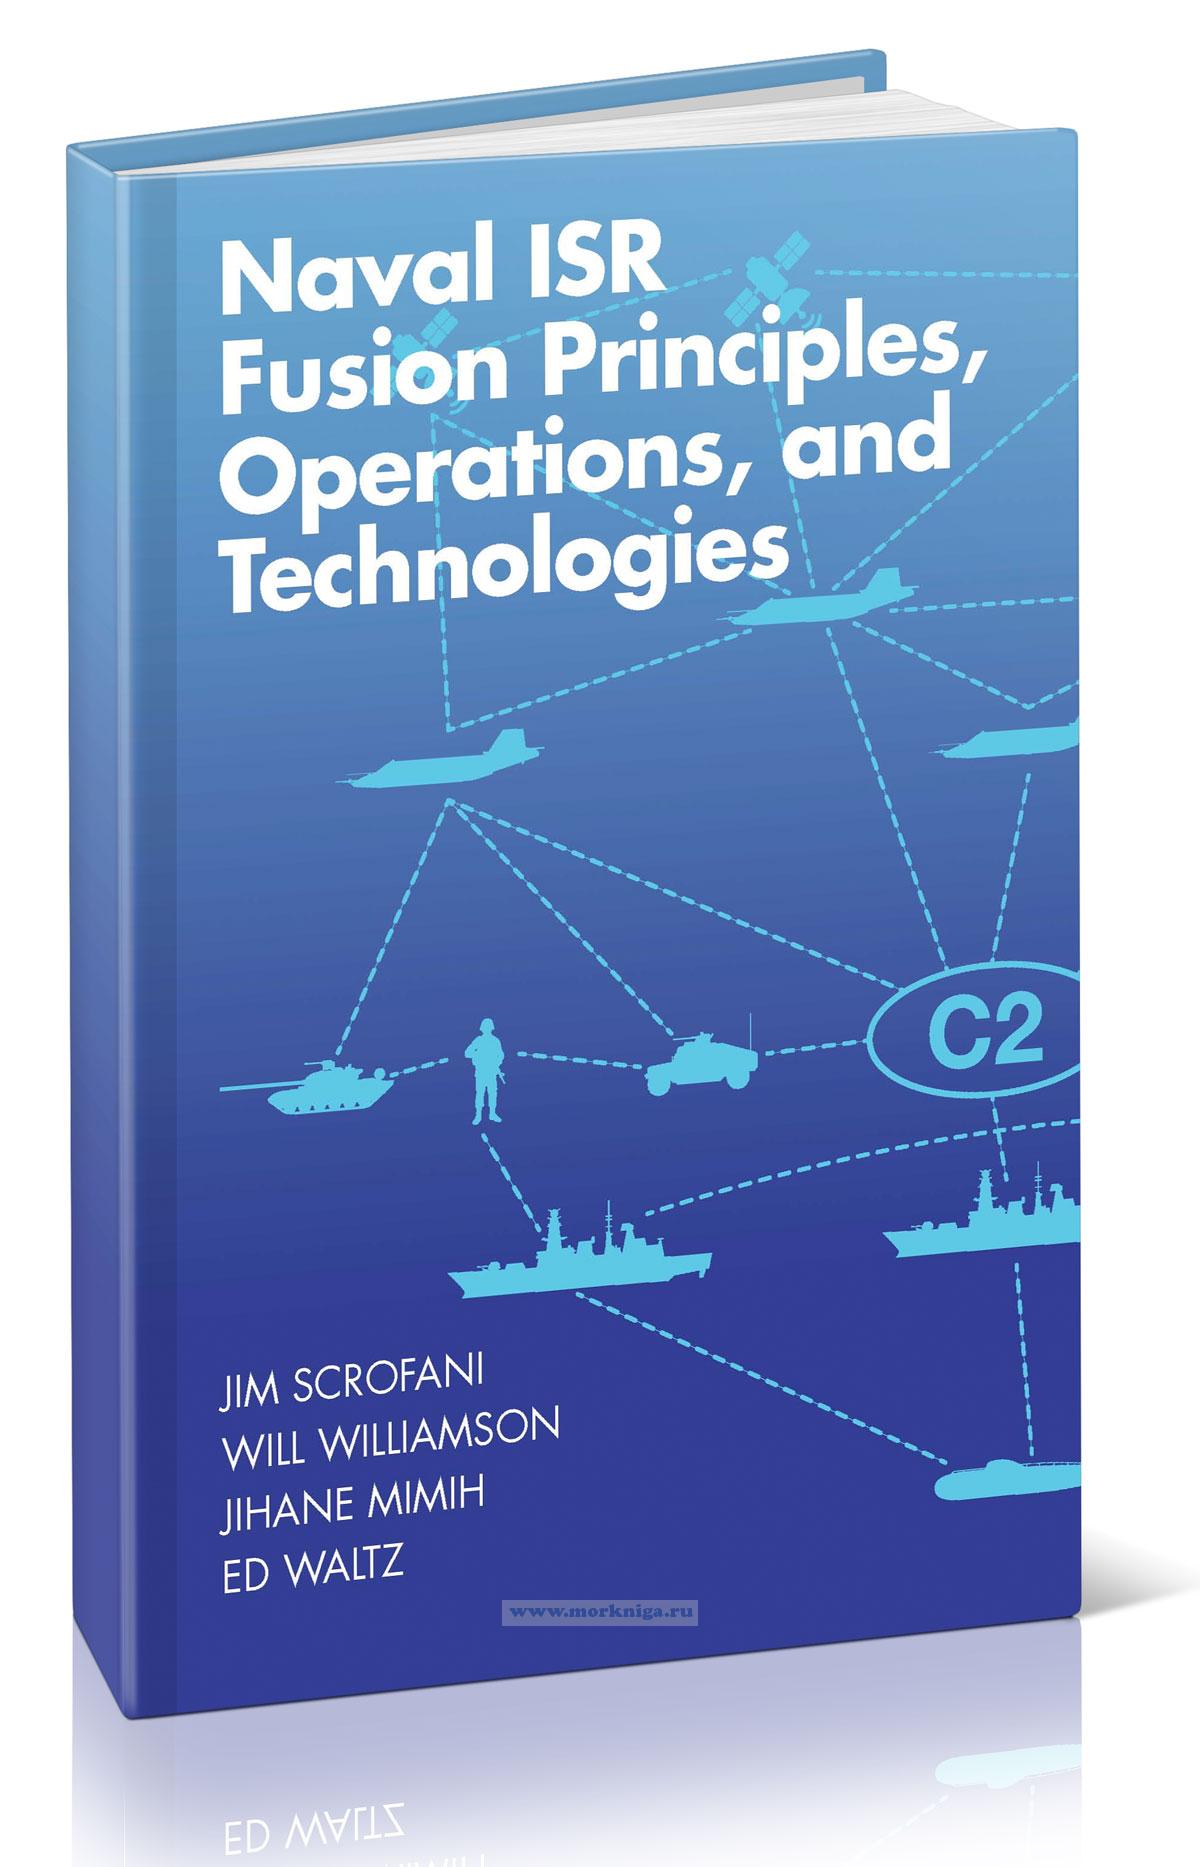 Naval ISR Fusion Principles, Operations and Technologies (J. Scrofani, W. Williamson, J. Mimih)/Интеграция Принципов, Назначений и Технологий в Военно-Морской Разведке